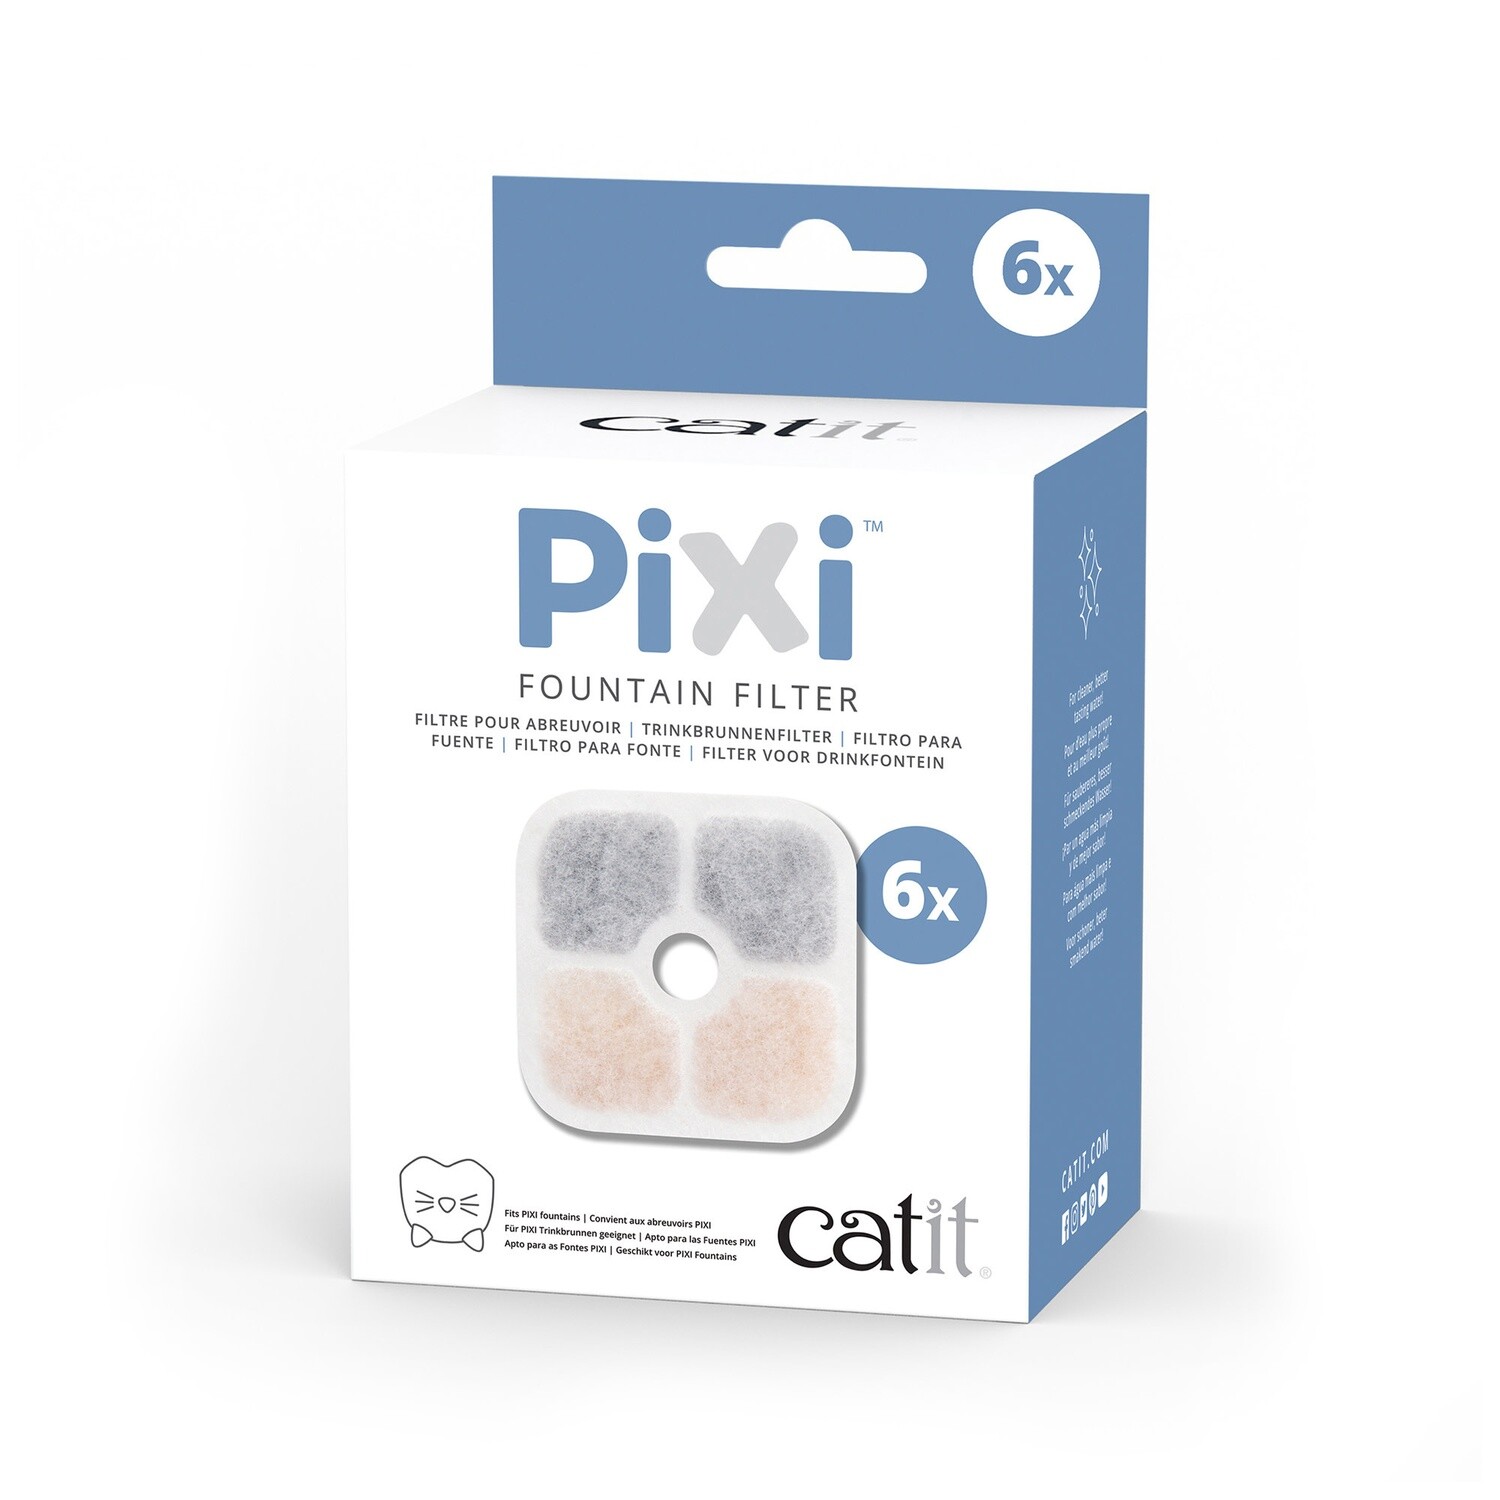 Catit Pixi Fountain Filter Cartridge 6pk